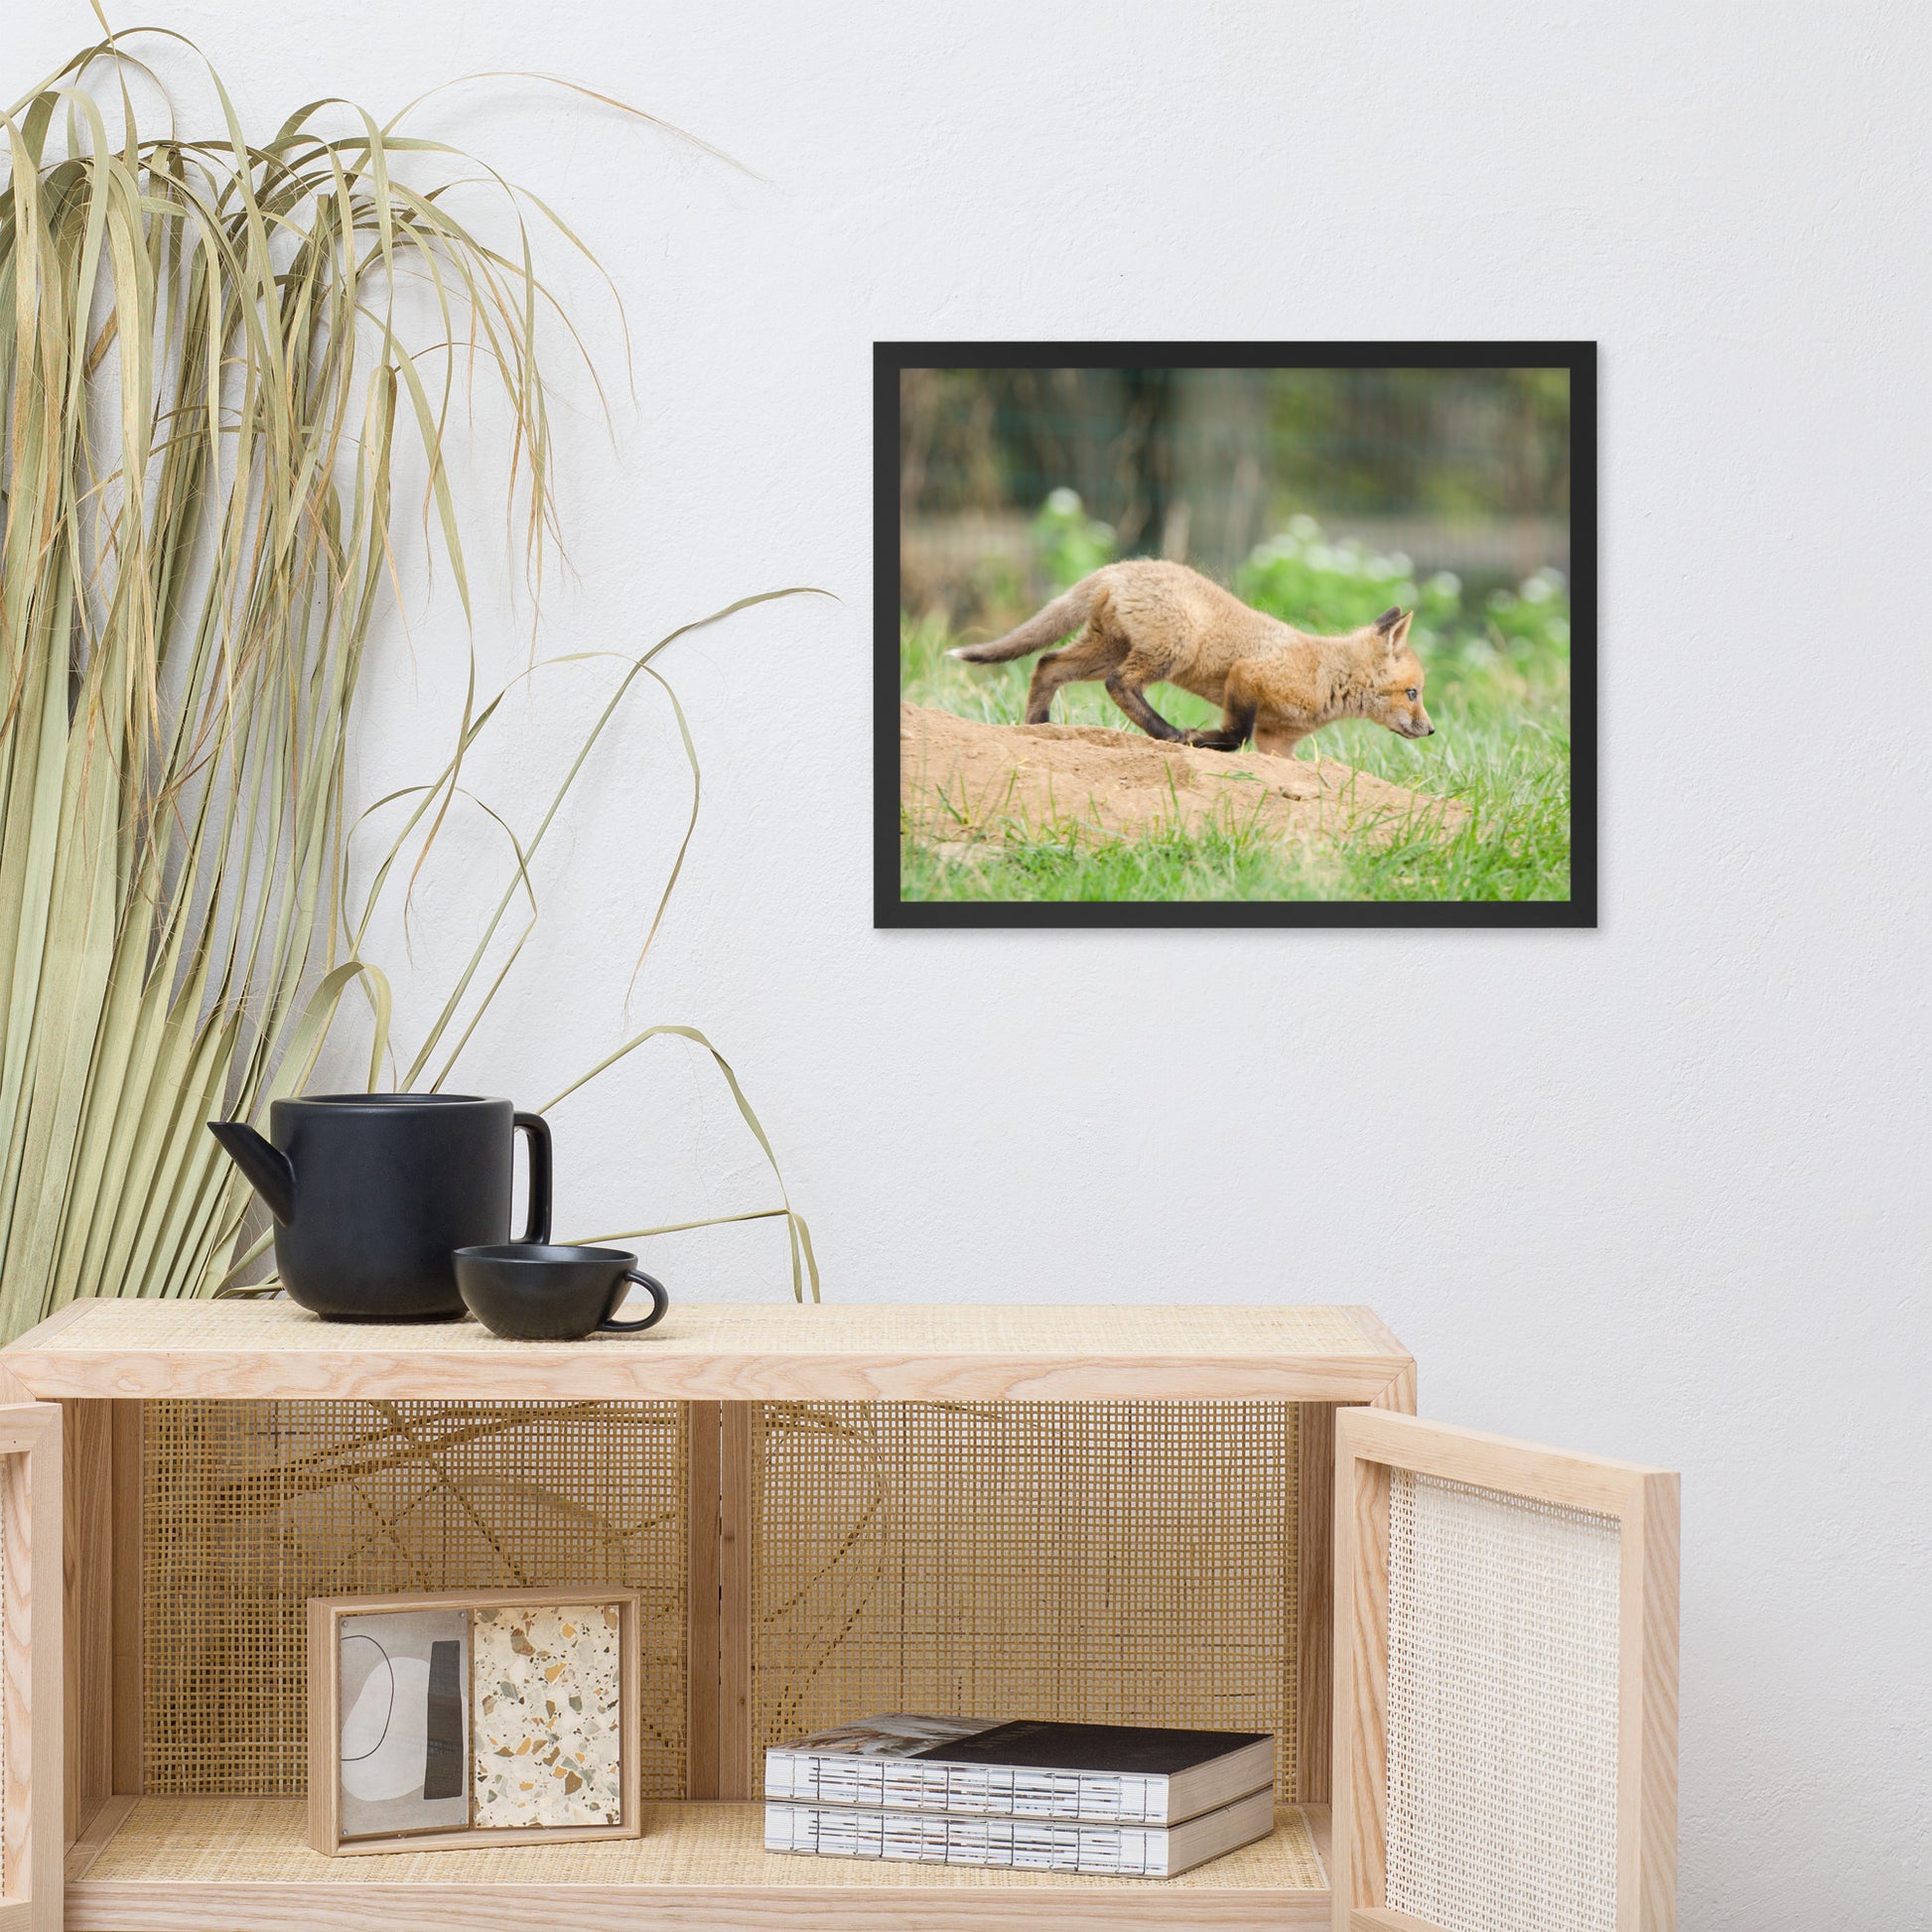 Cute Animal Prints For Nursery: Baby Fox Pup In Meadow - Animal / Wildlife / Nature Artwork - Wall Decor - Framed Wall Art Print